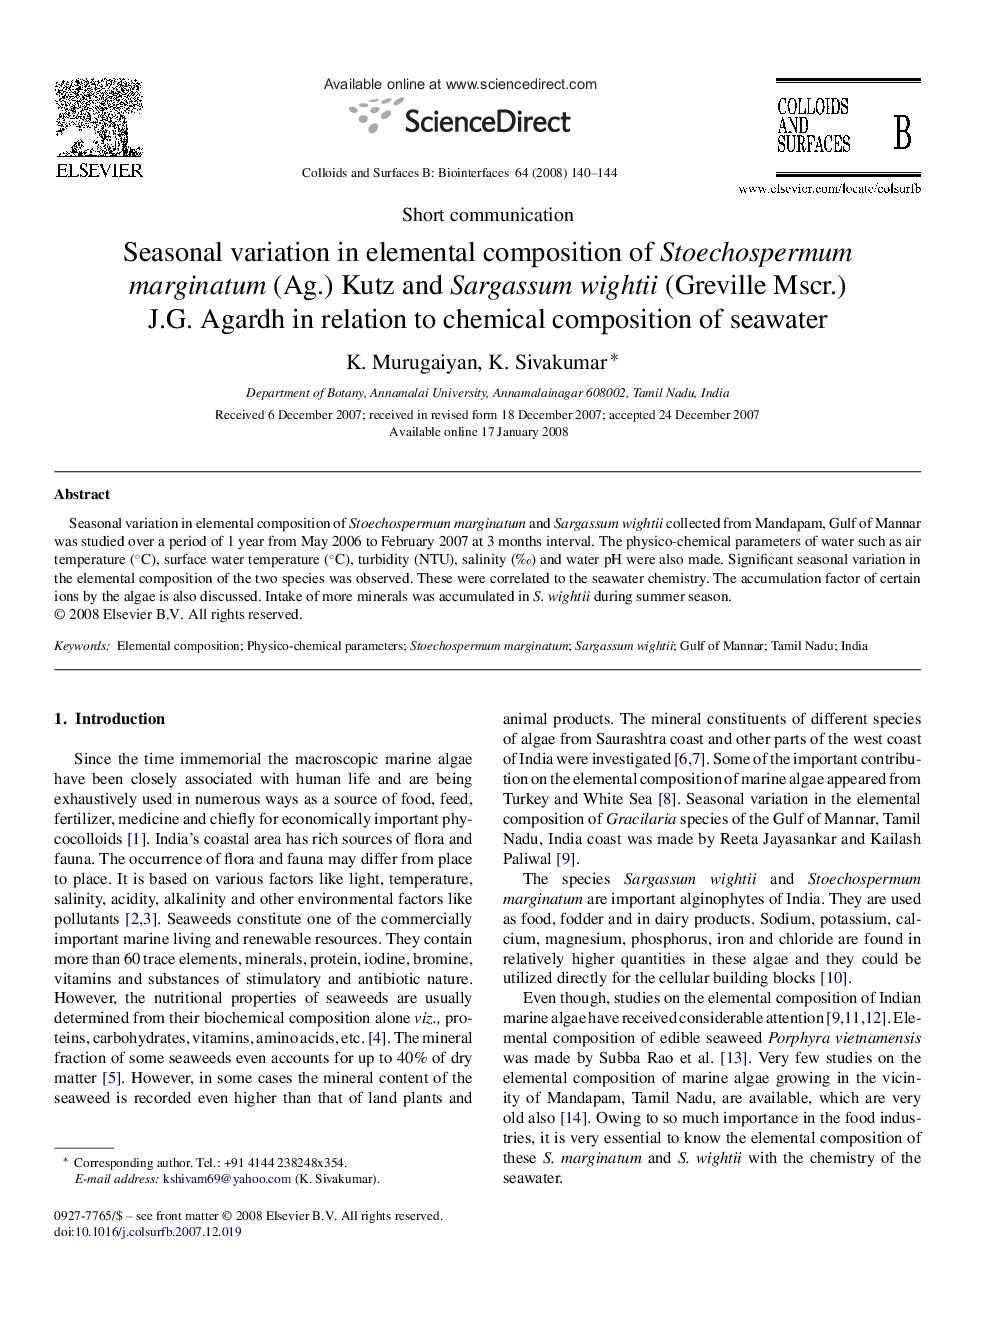 Seasonal variation in elemental composition of Stoechospermum marginatum (Ag.) Kutz and Sargassum wightii (Greville Mscr.) J.G. Agardh in relation to chemical composition of seawater